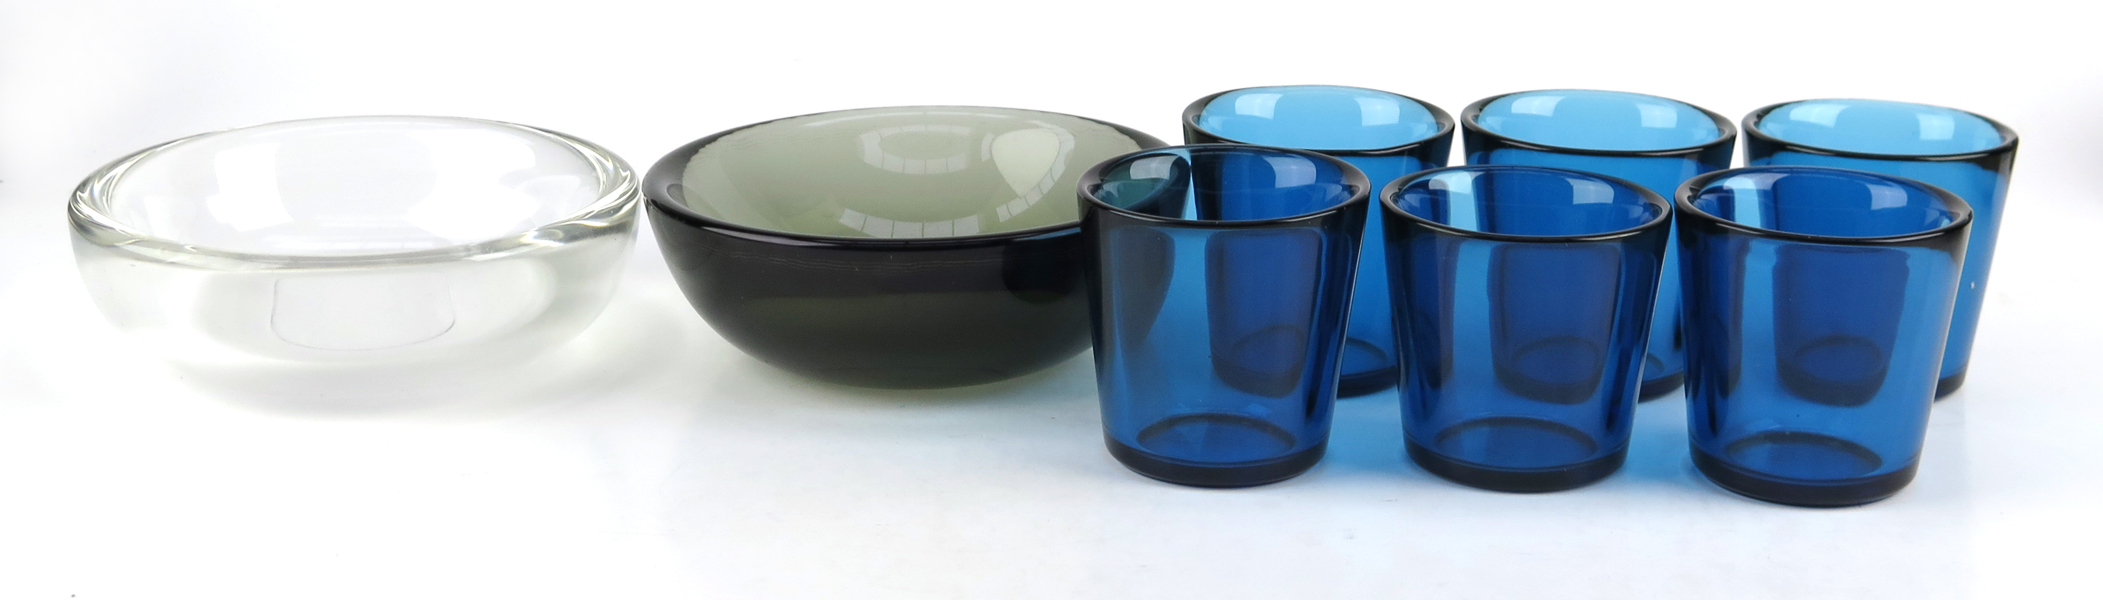 Palmquist, Sven för Orrefors, skålar 8 st, glas, Fuga, design 1953, _20125a_8da543d22760b9f_lg.jpeg